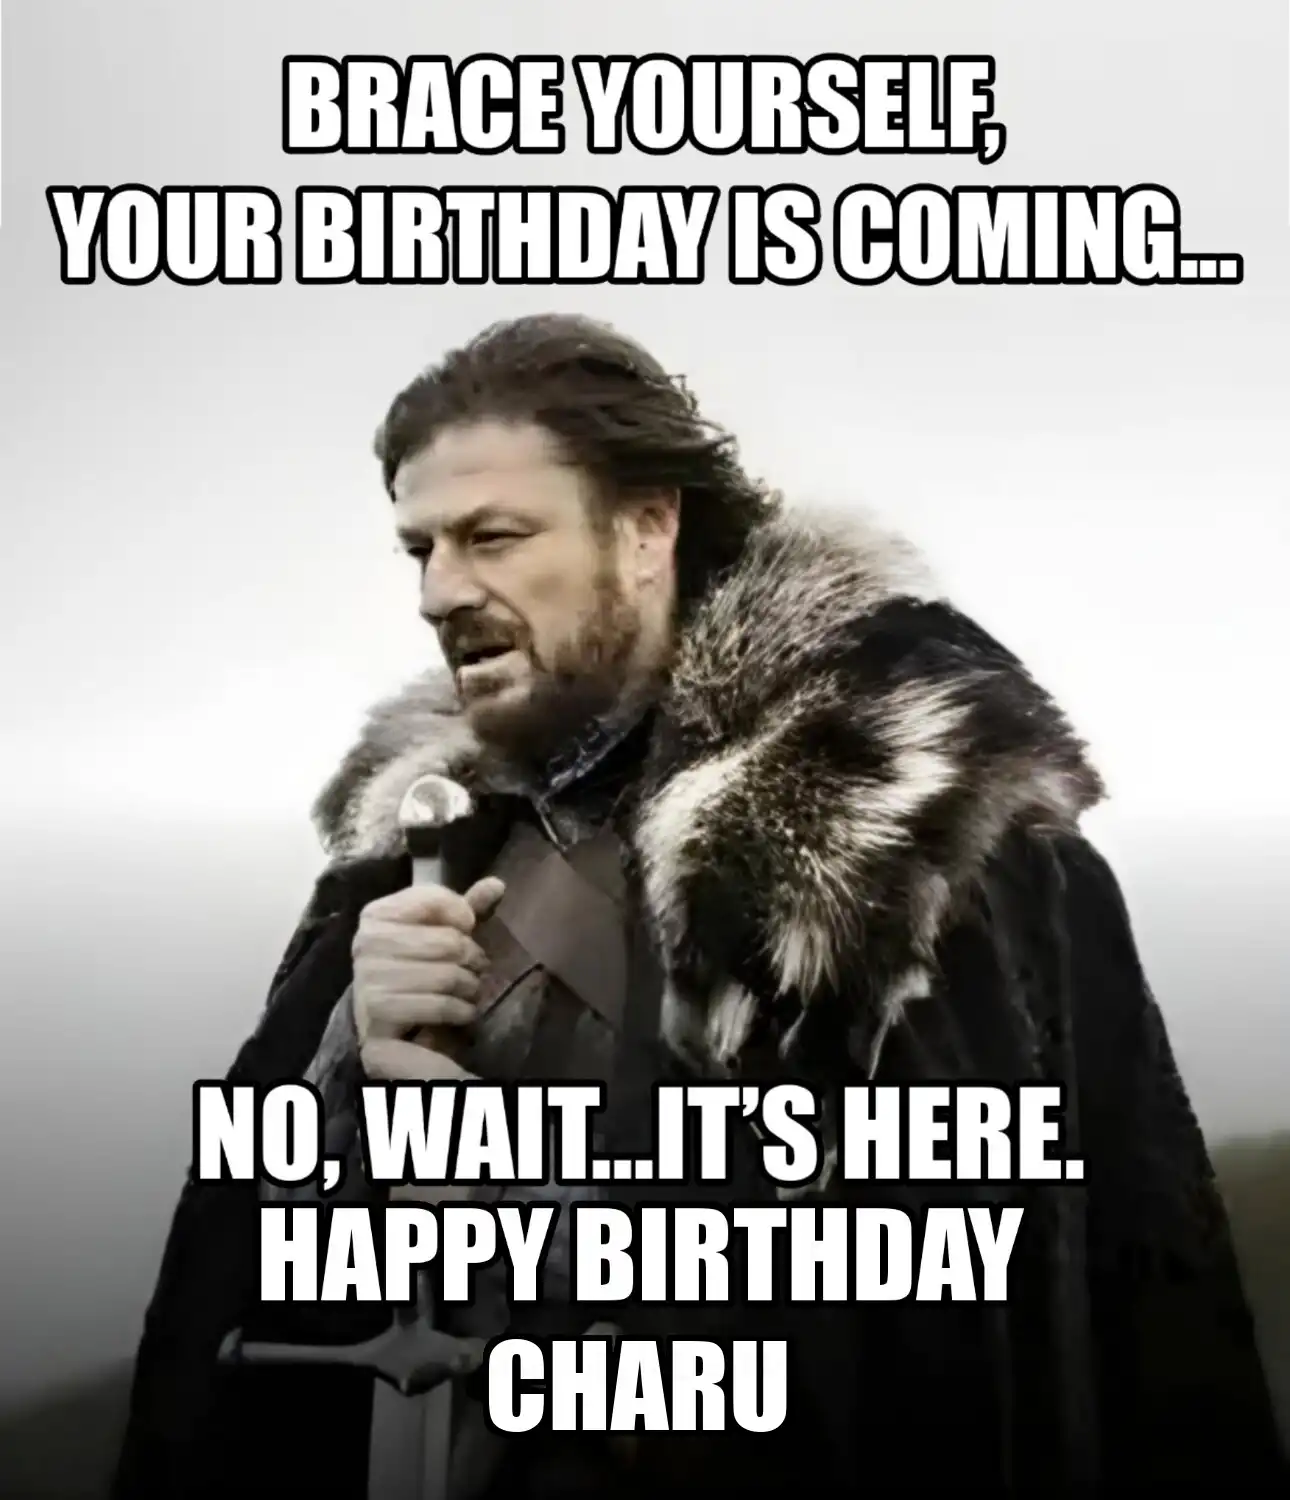 Happy Birthday Charu Brace Yourself Your Birthday Is Coming Meme